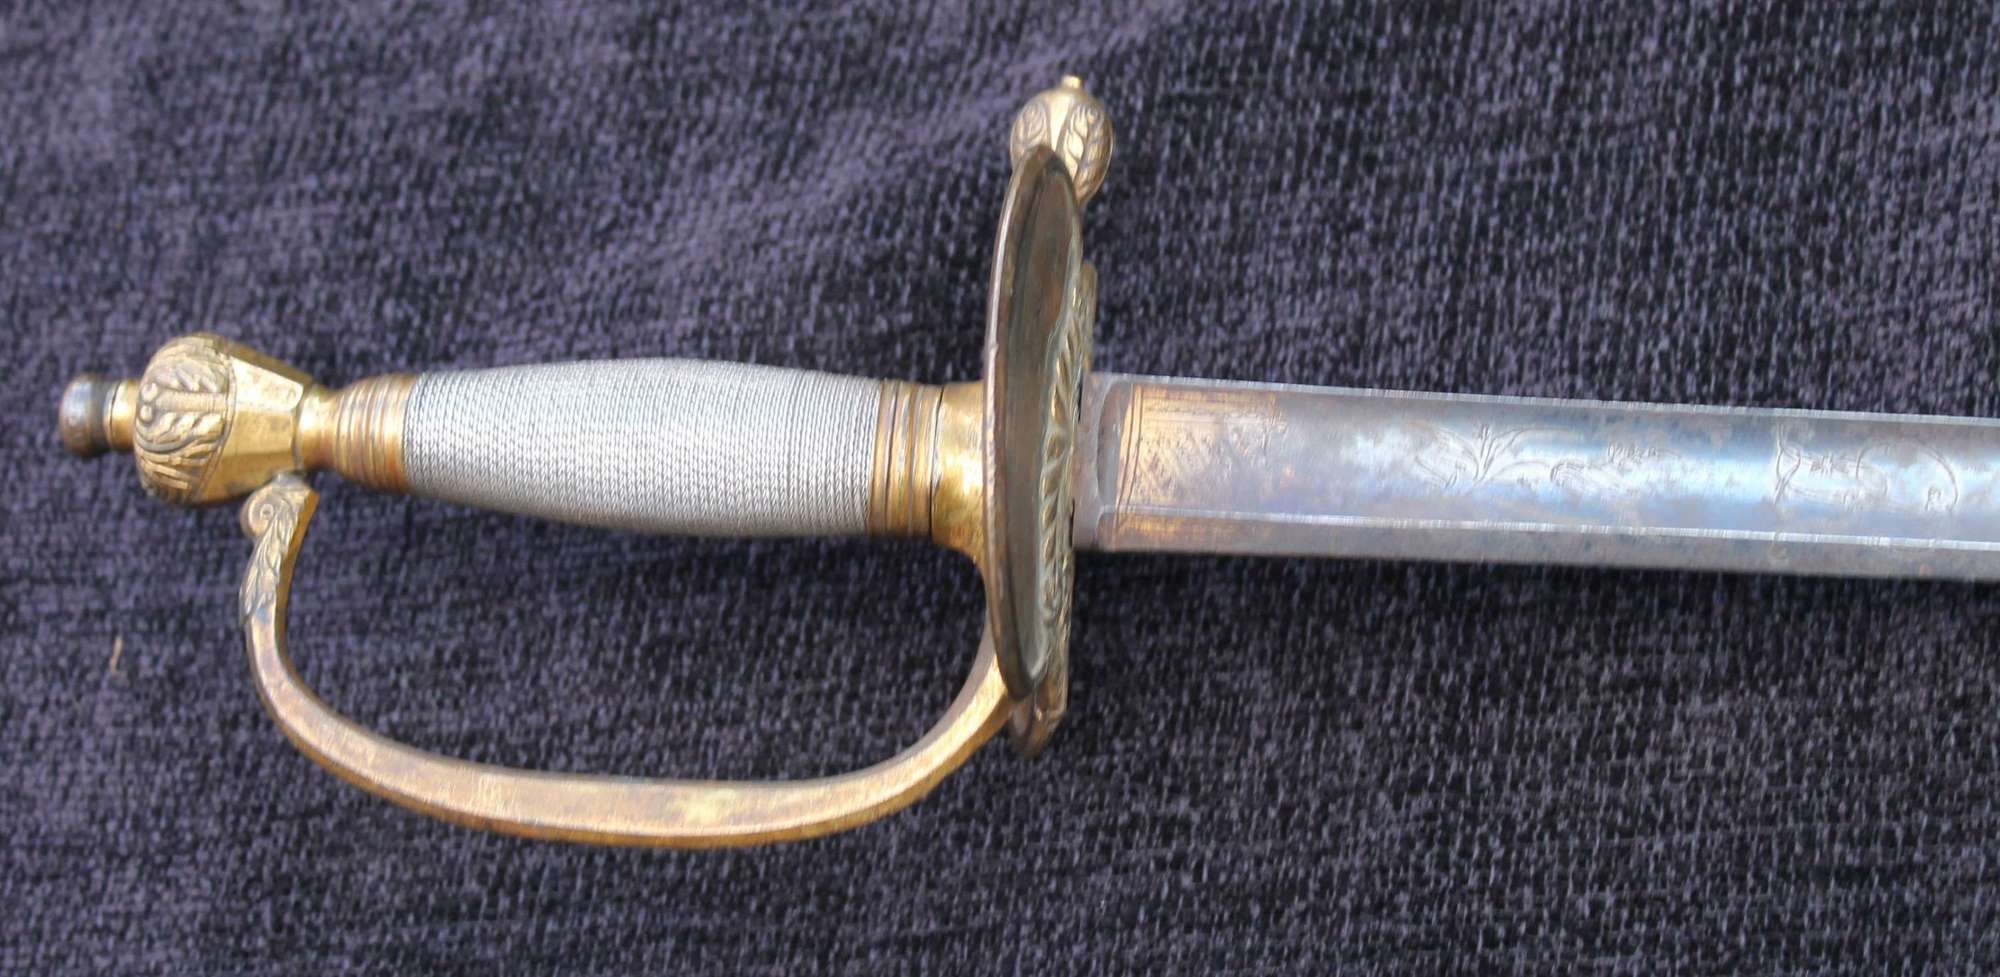 1796 Infantry Officers Sword Blue and Gilt Blade